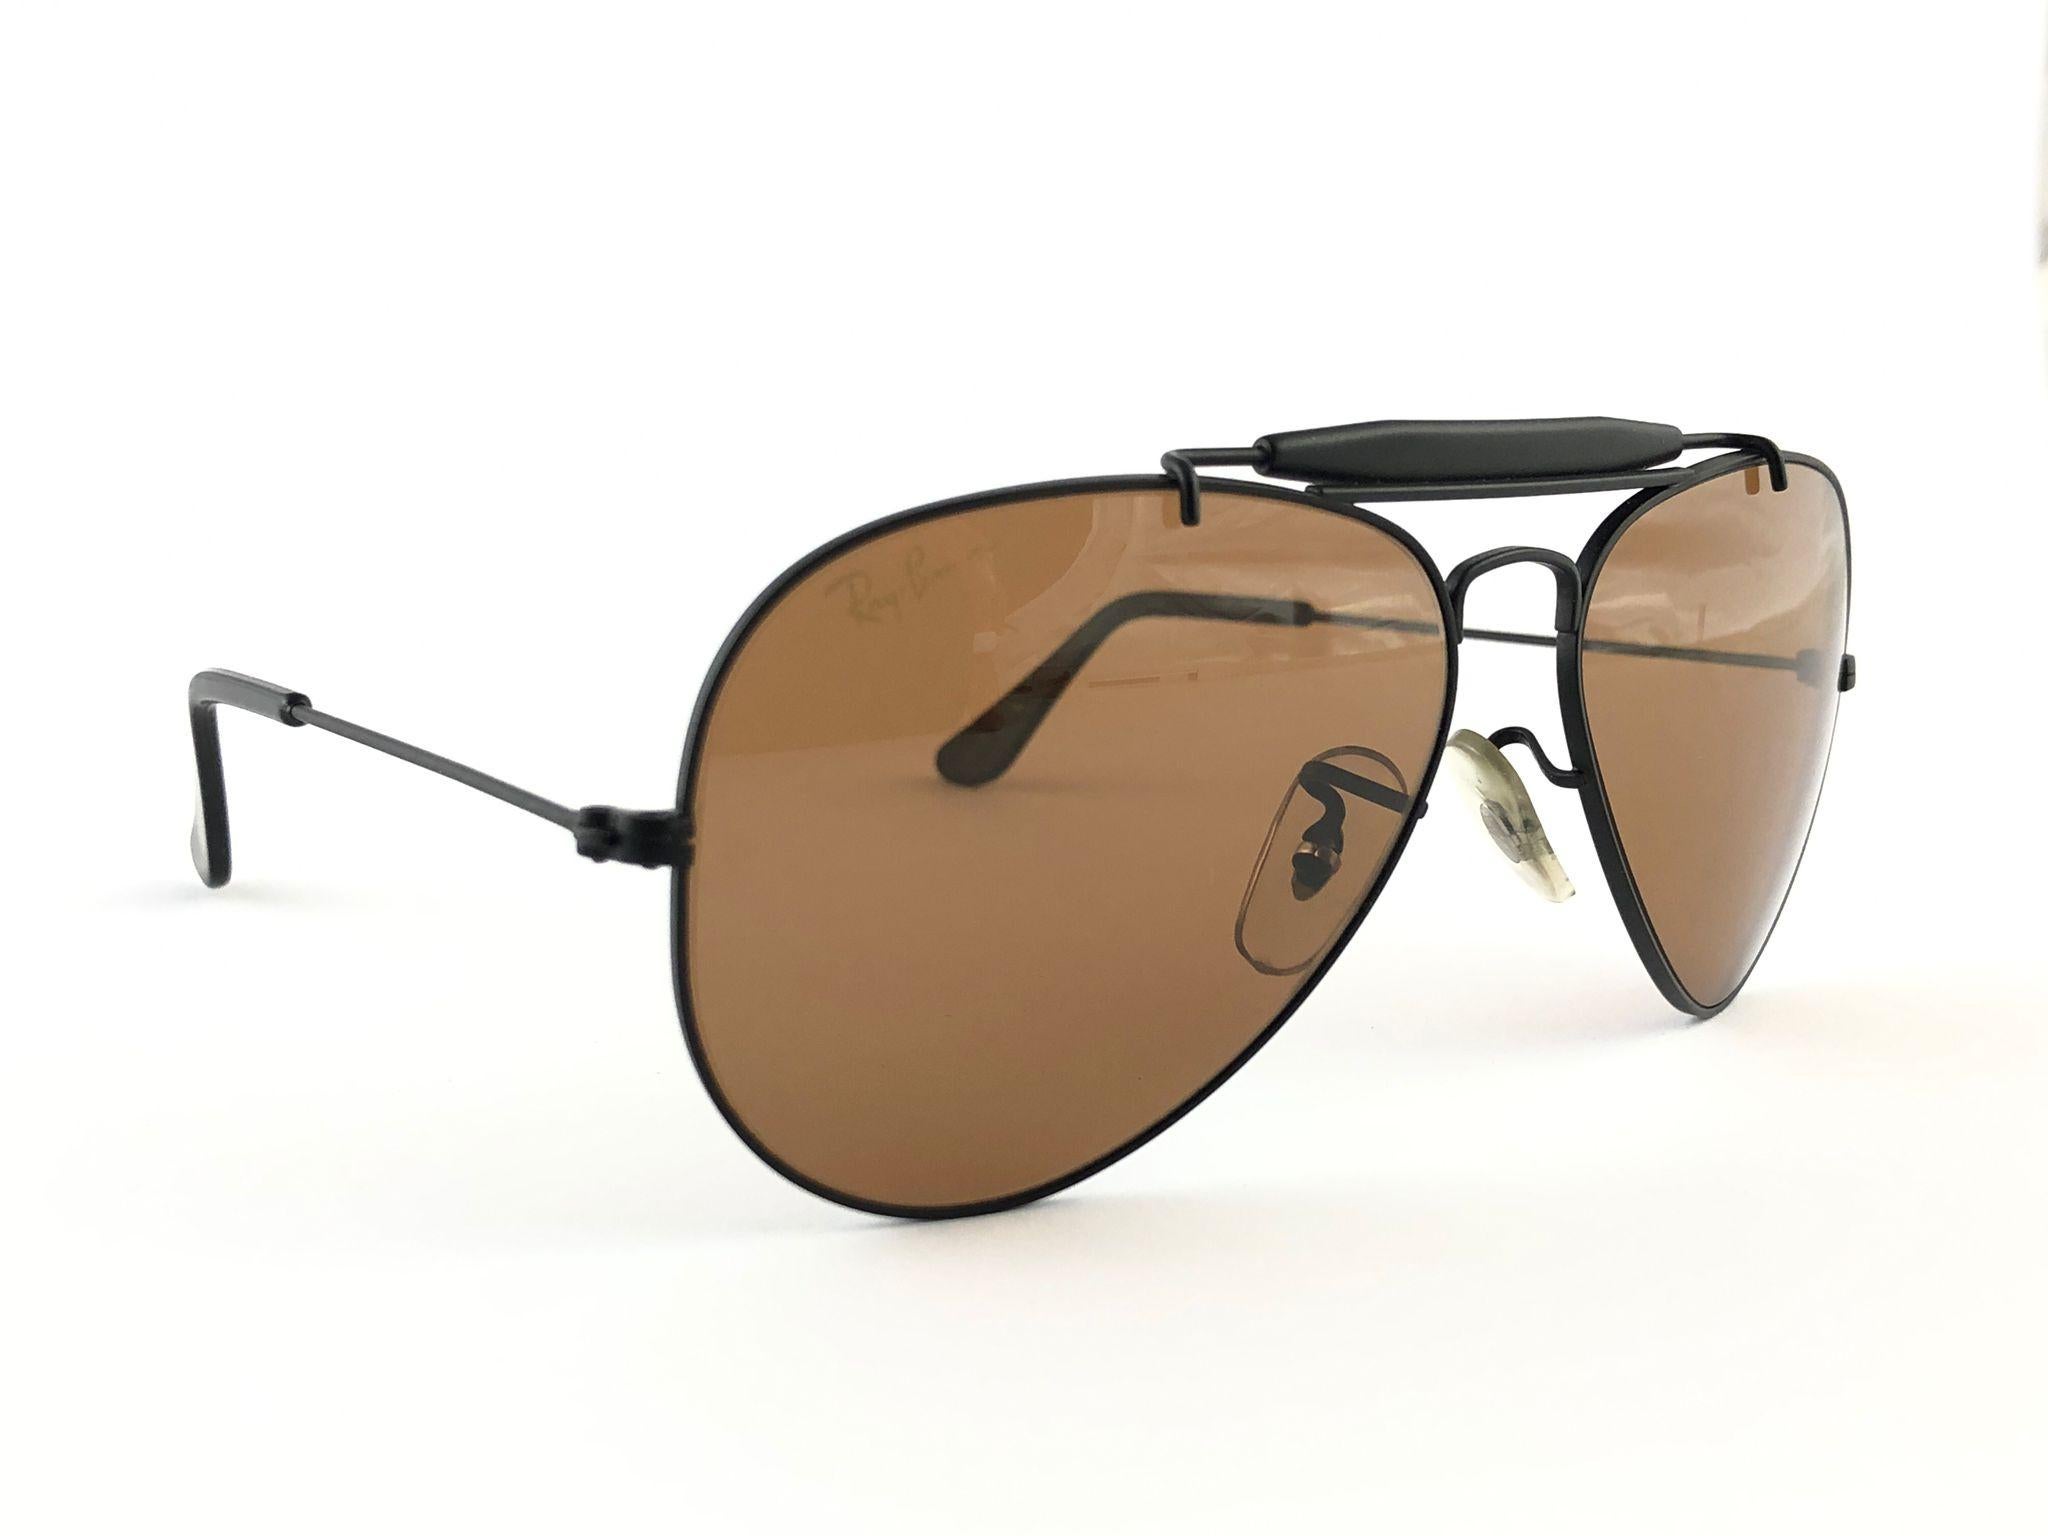 Black New Ray Ban Chromax 58Mm Outdoorsman B&L Collectors Item USA Sunglasses